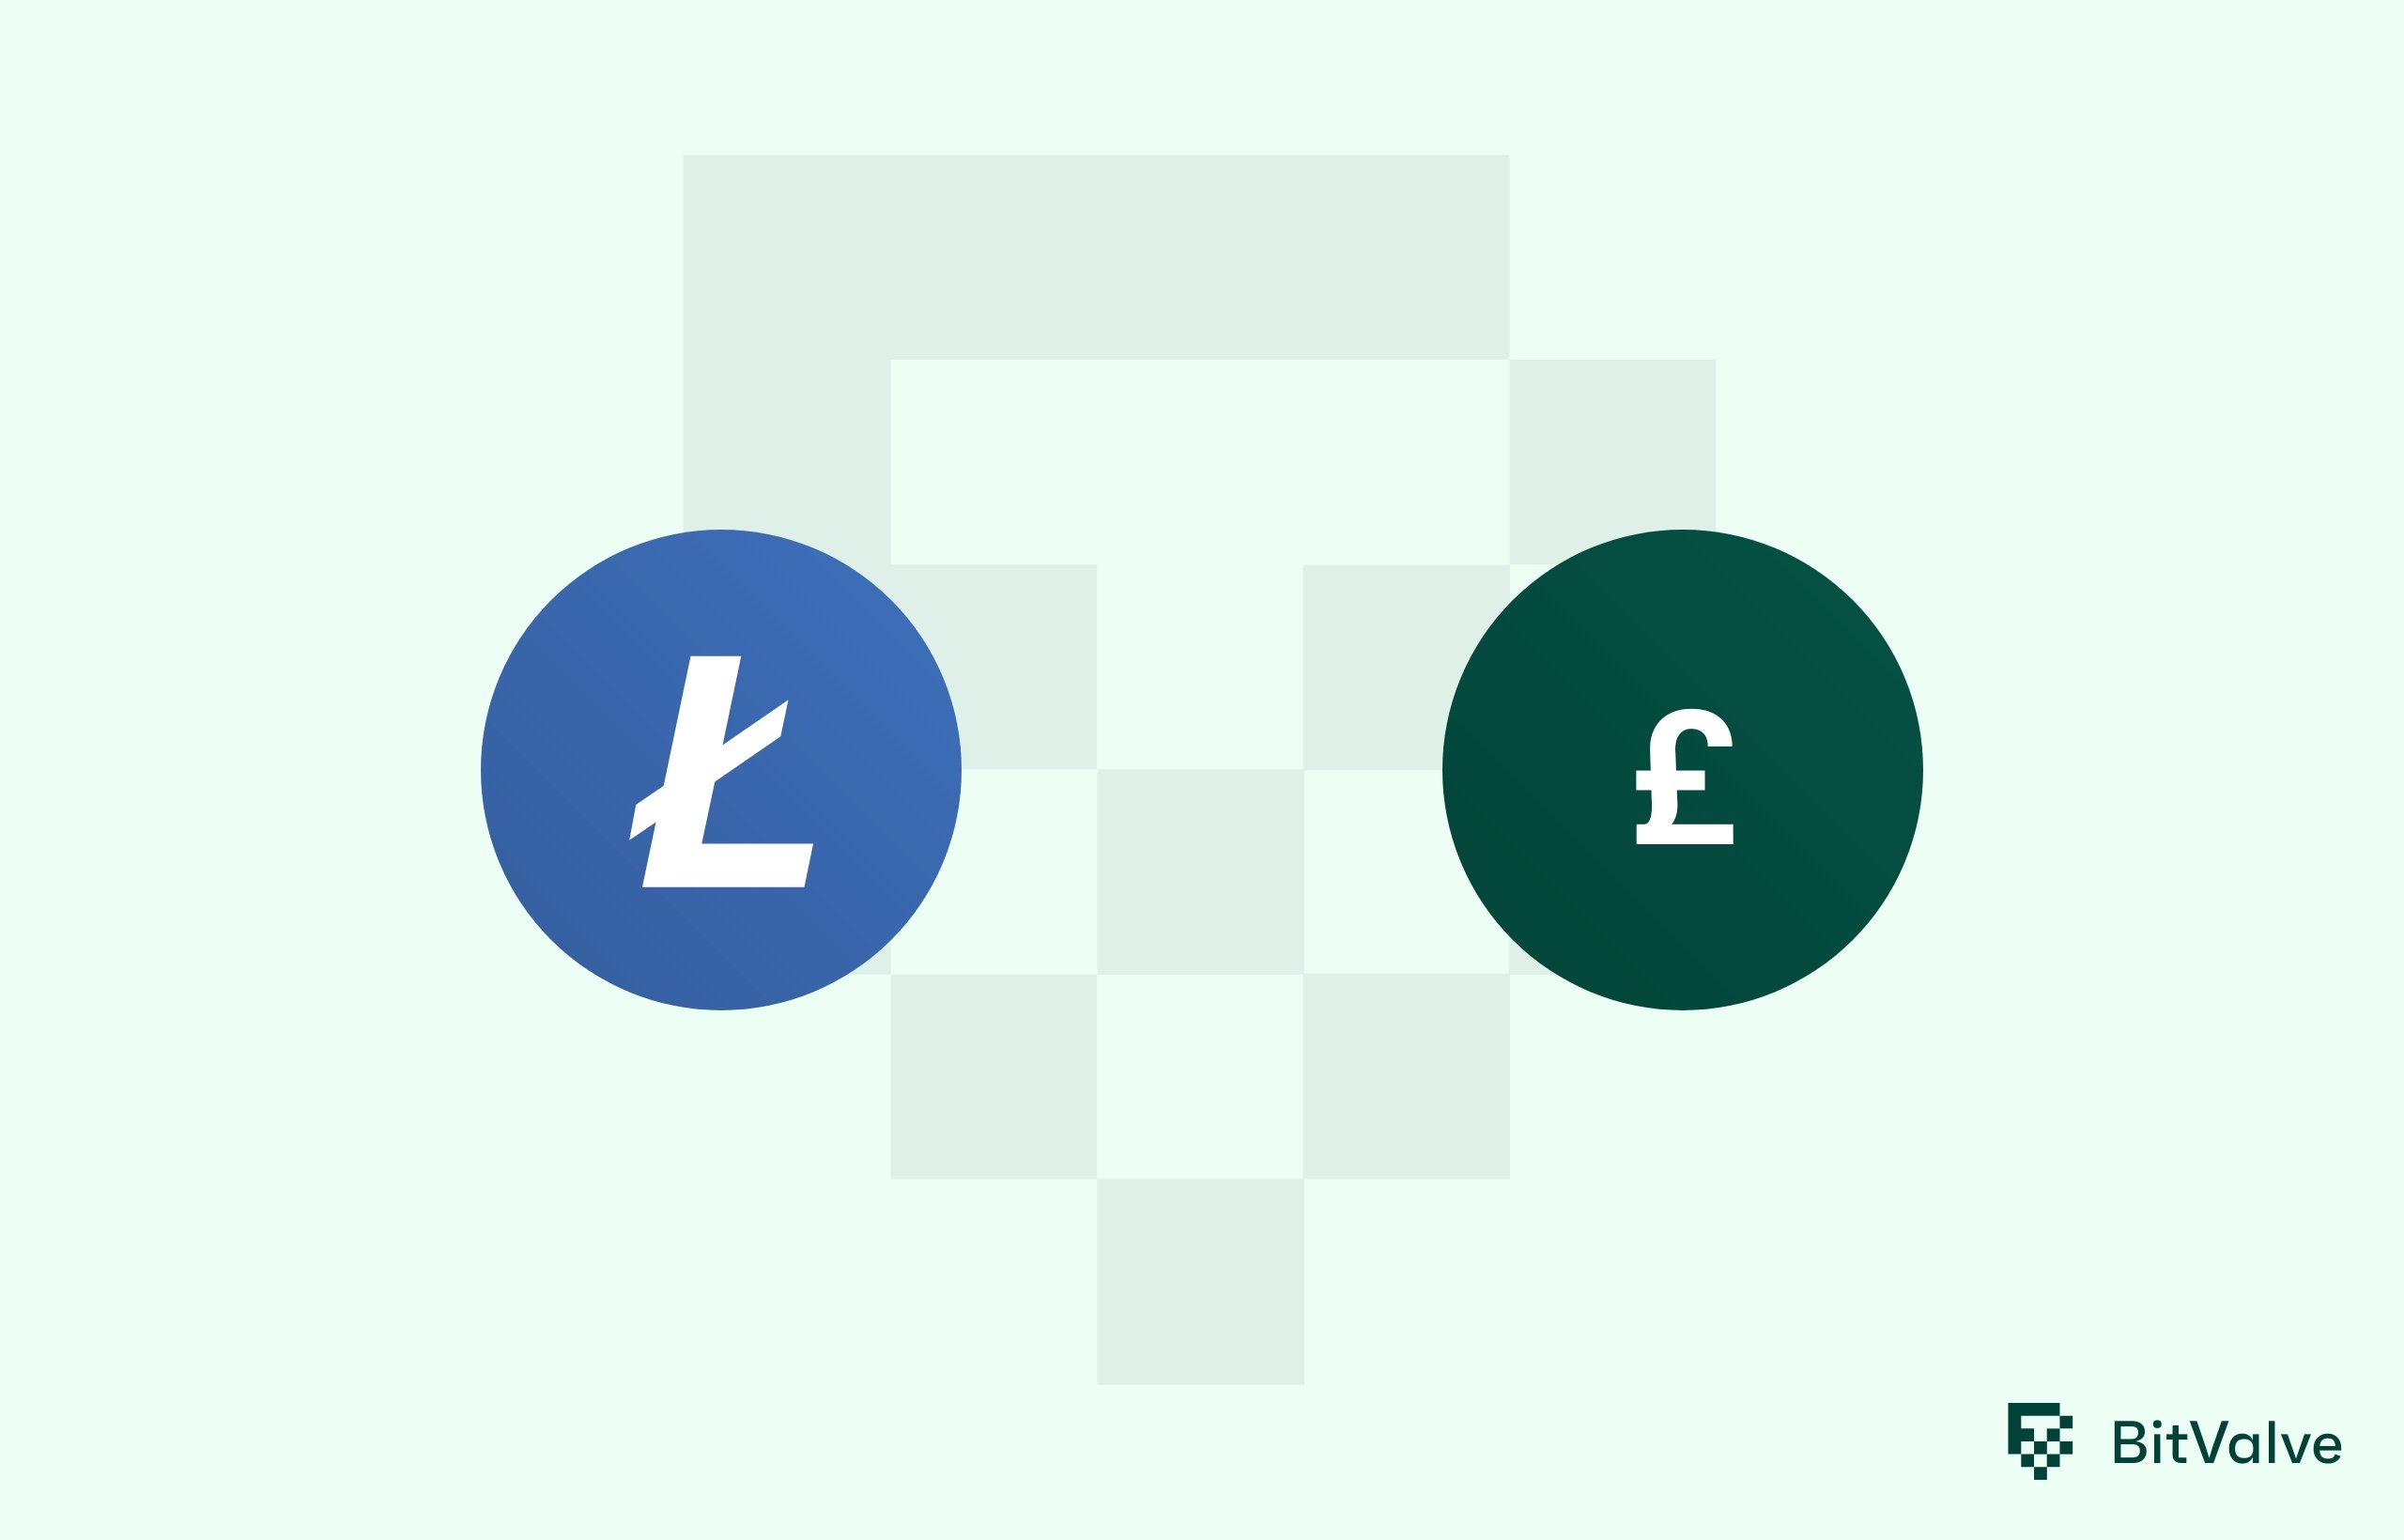 Litecoin GBP (LTC-GBP) Price, Value, News & History - Yahoo Finance